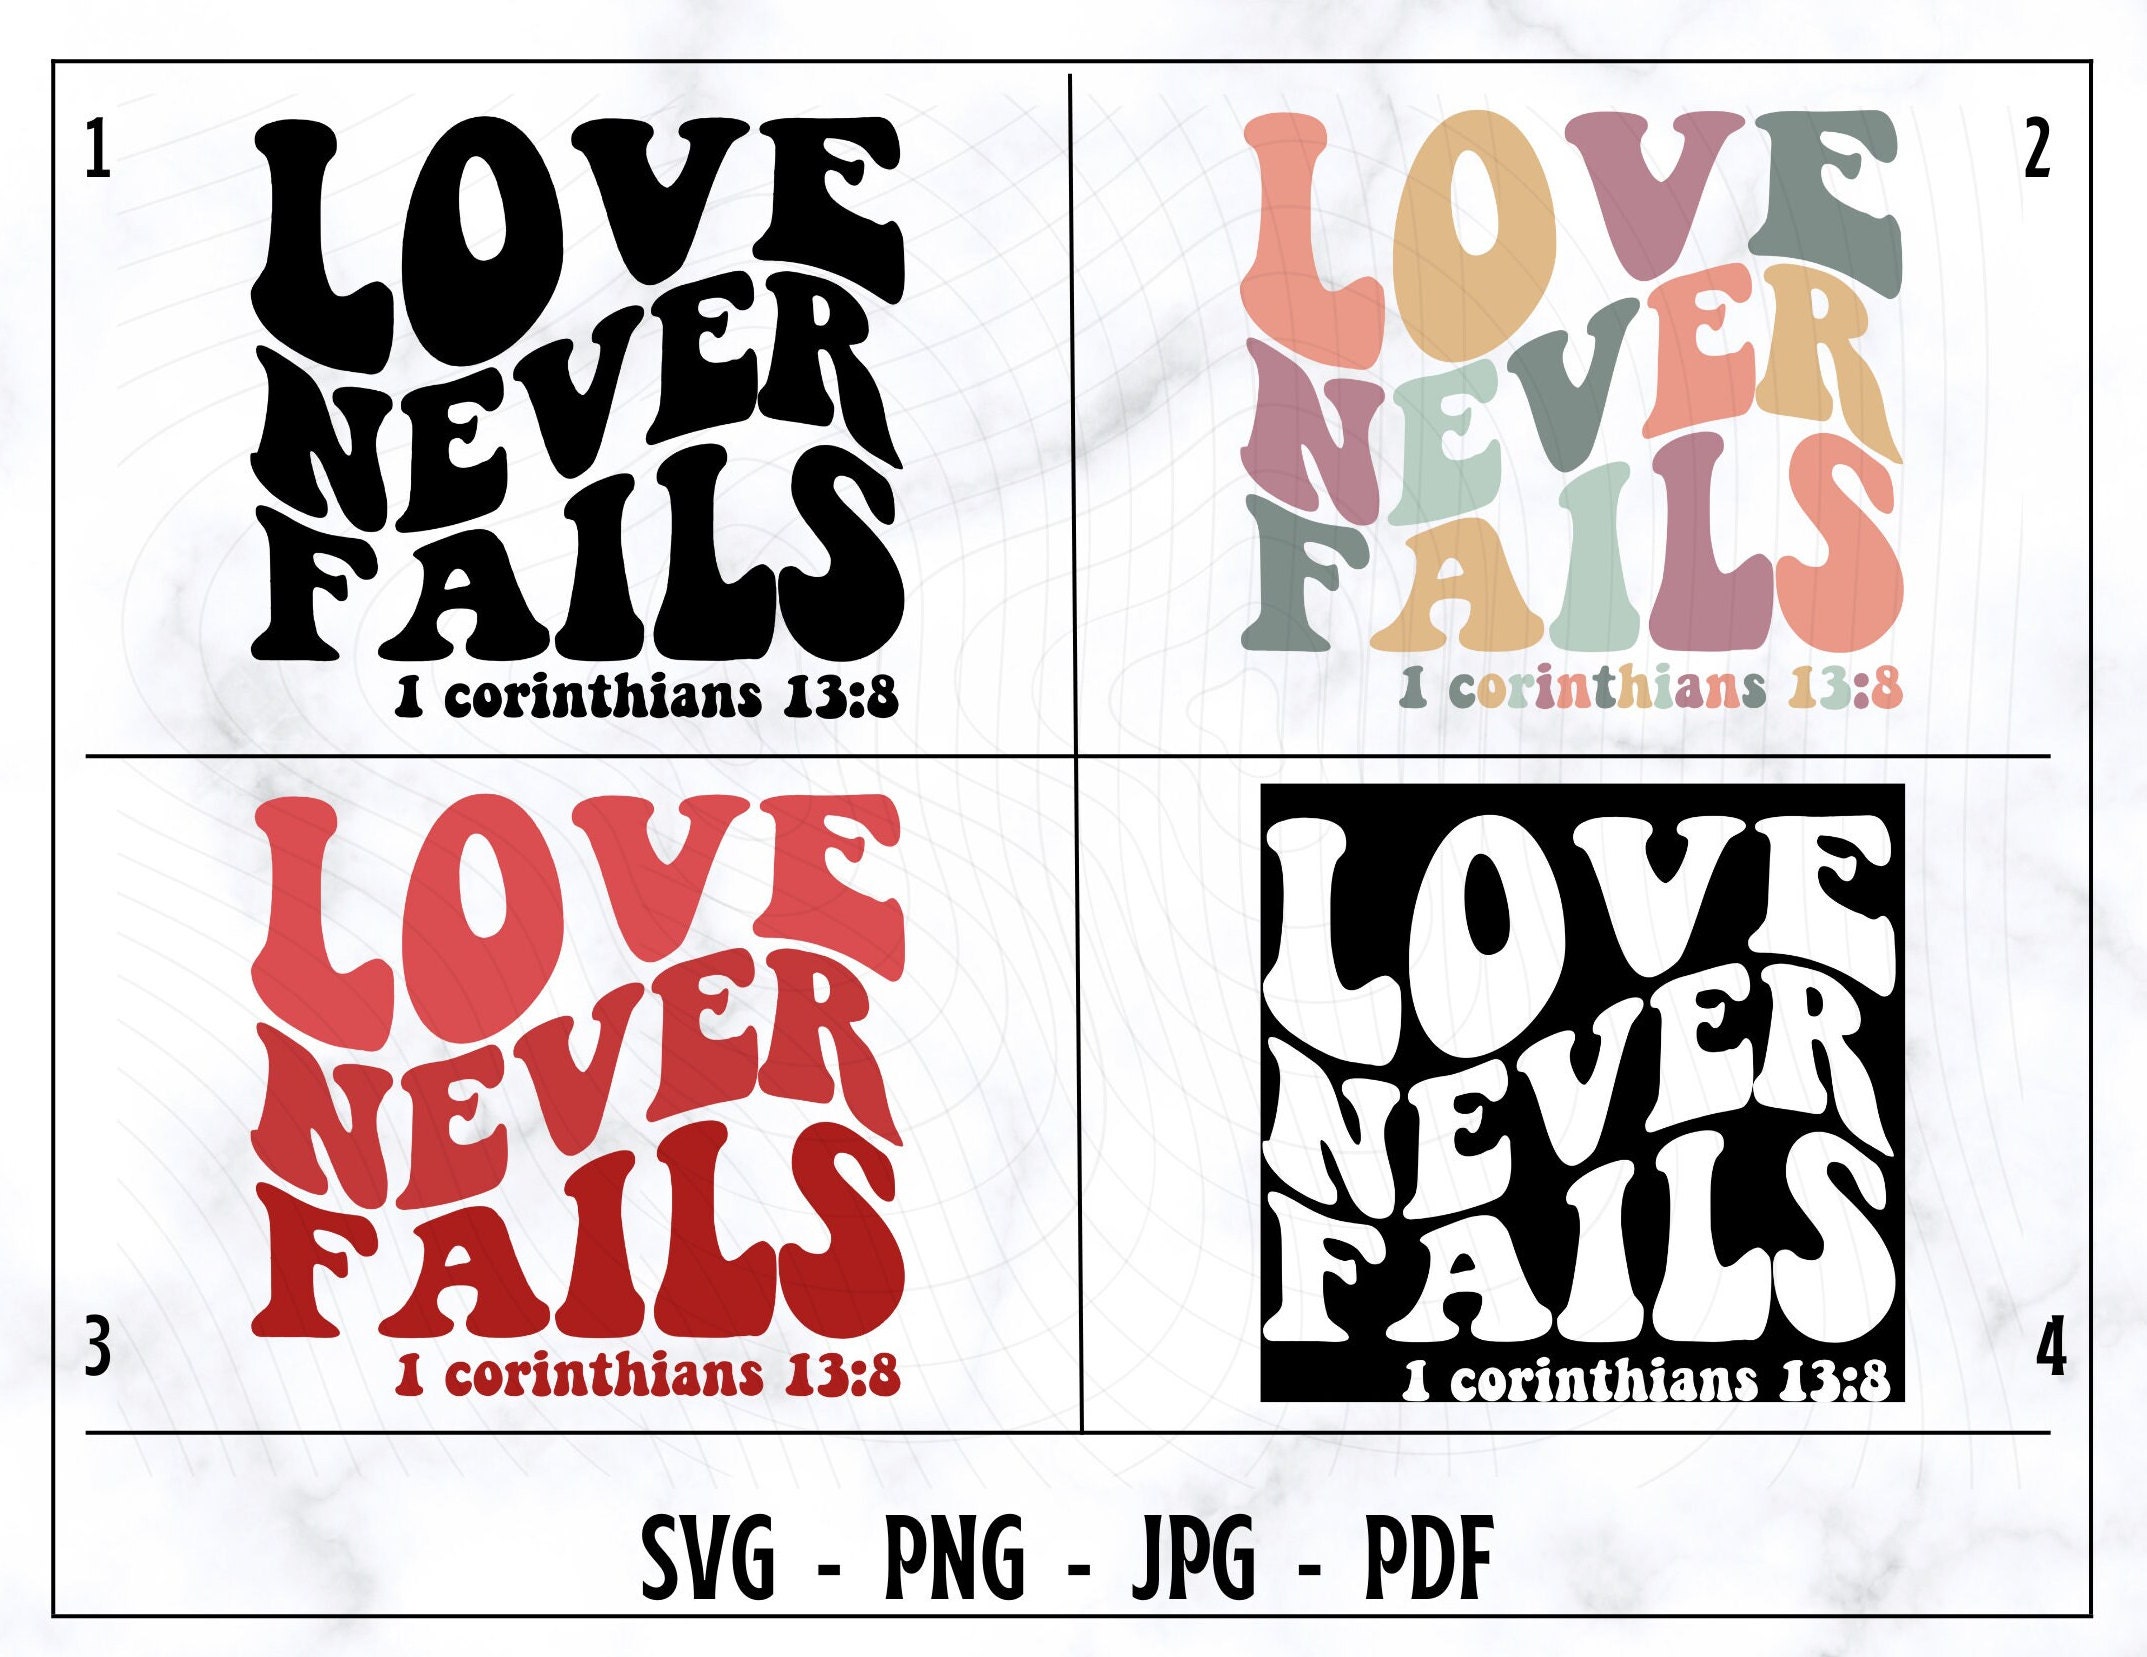 Love Never Fails Premium Heather Gray Graphic Tee - A2822PHG 2XLarge